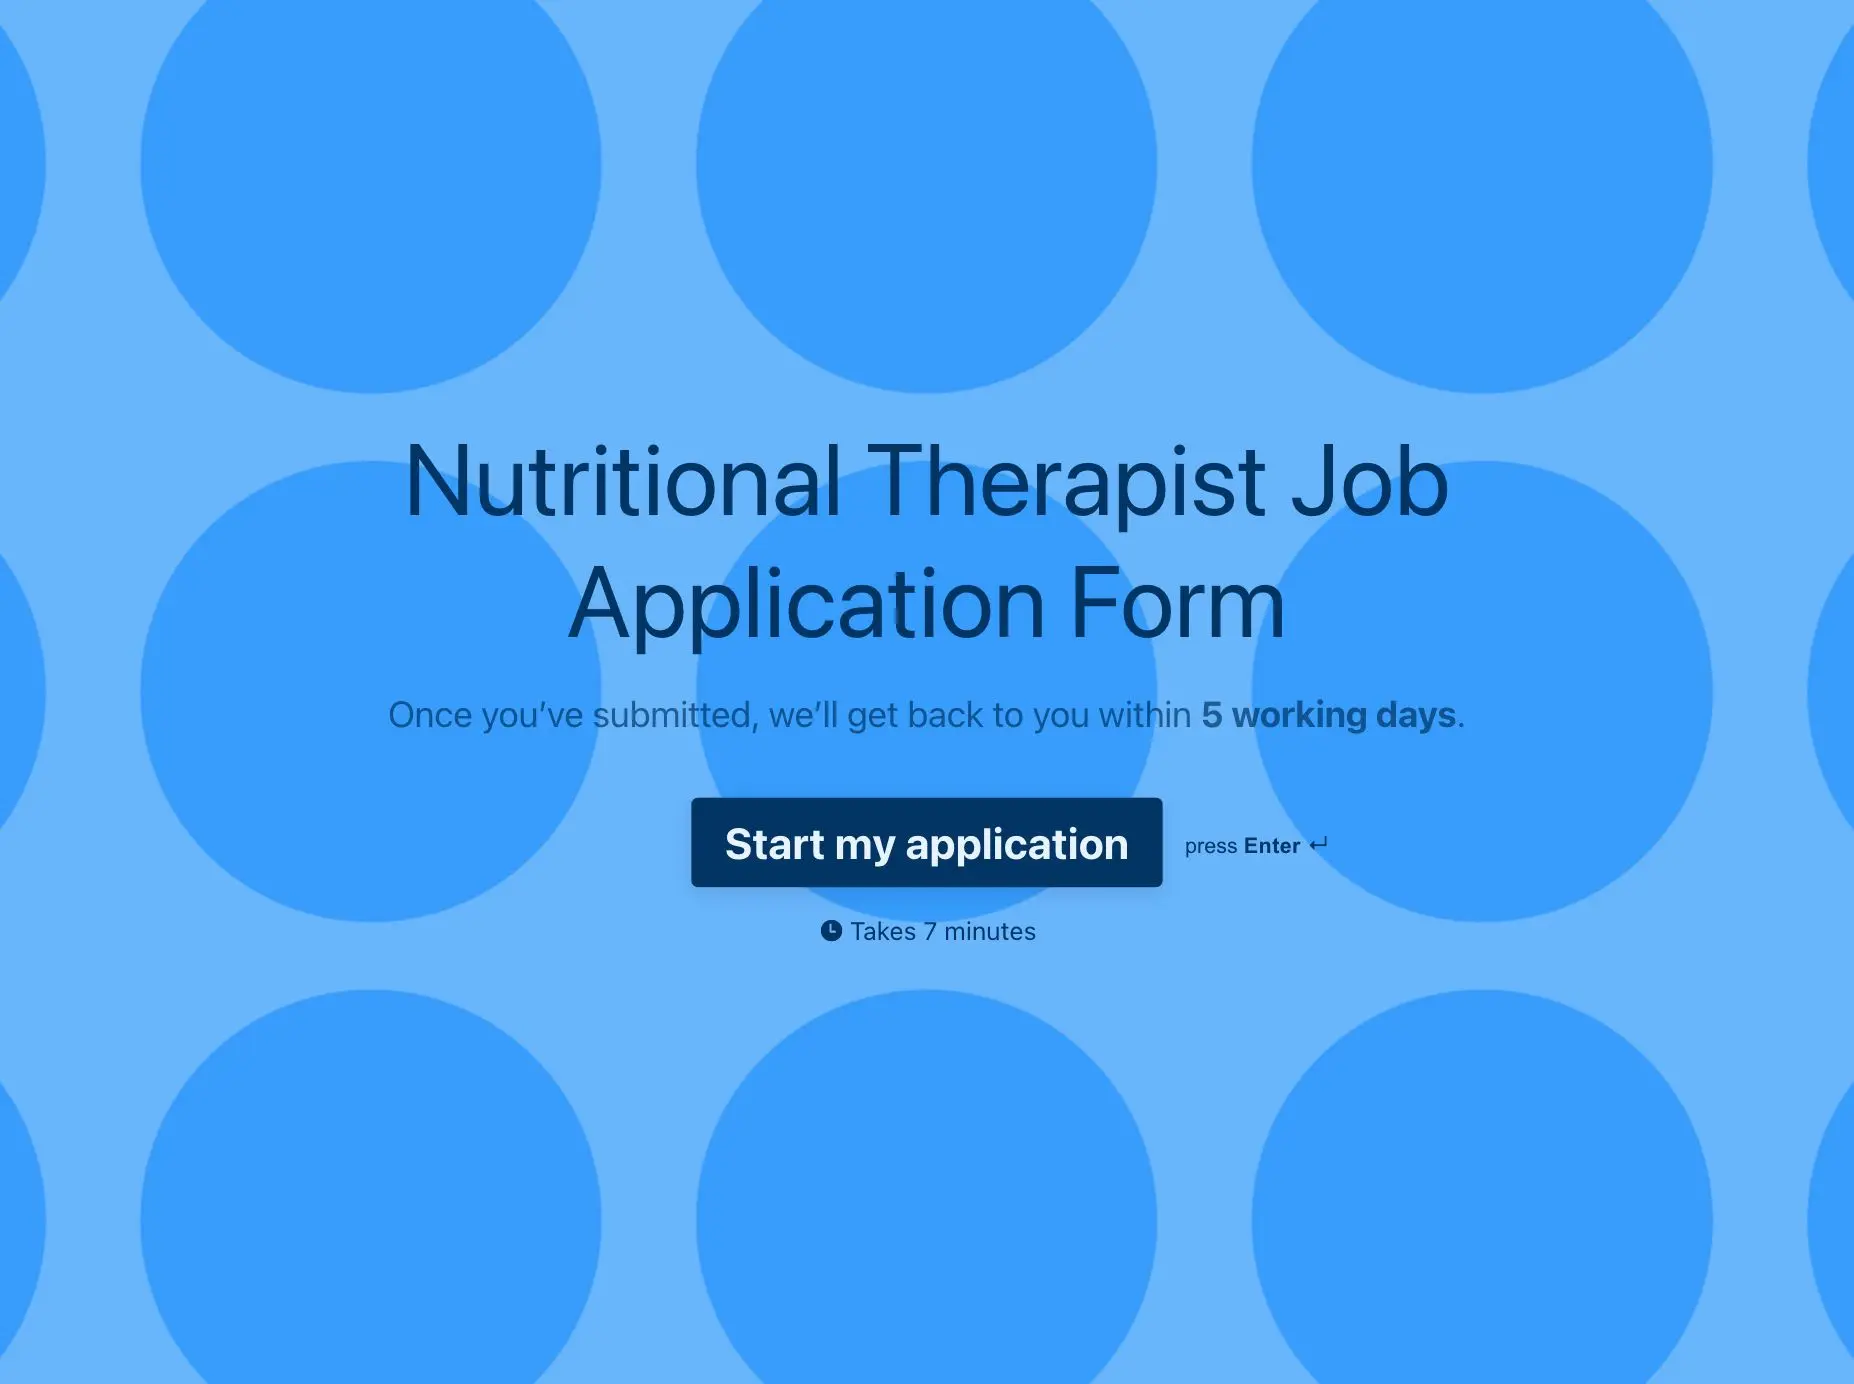 Nutritional Therapist Job Application Form Template Hero